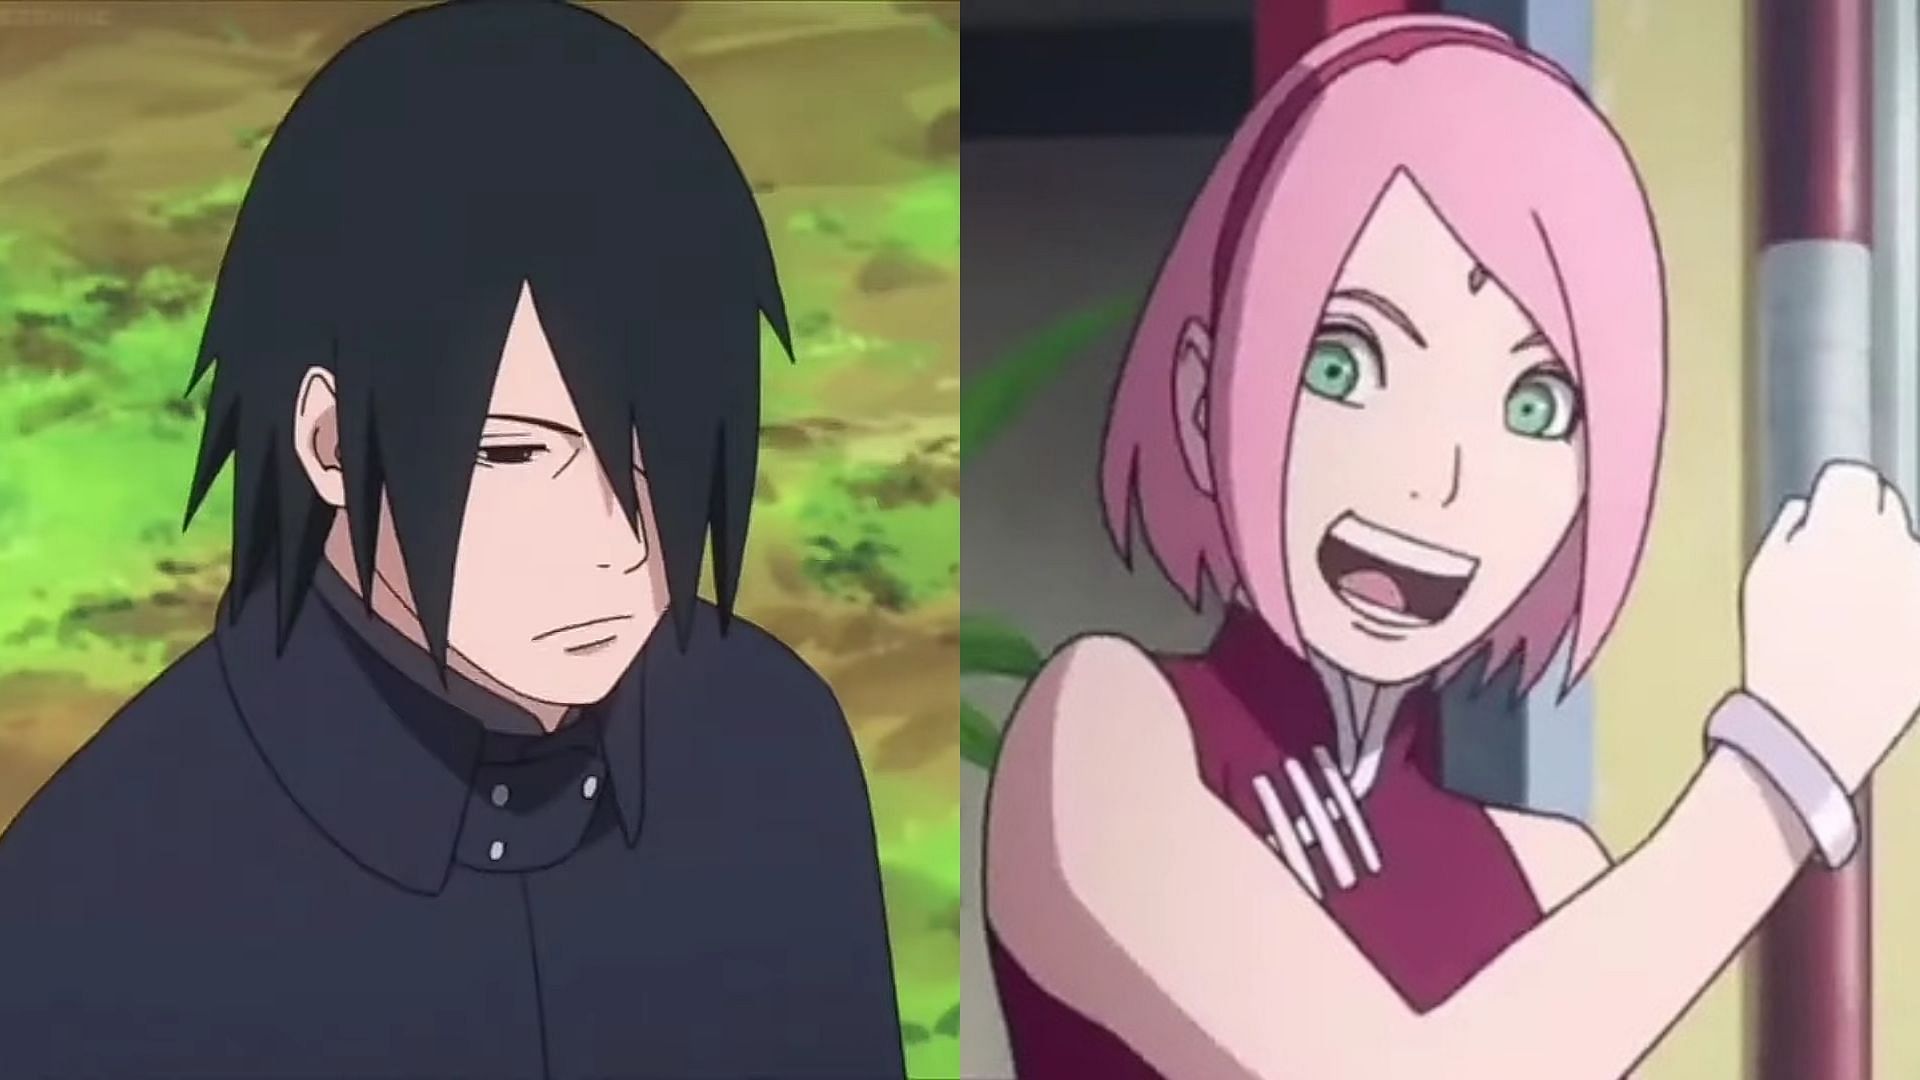 In which episode did Sasuke marry Sakura? - Quora